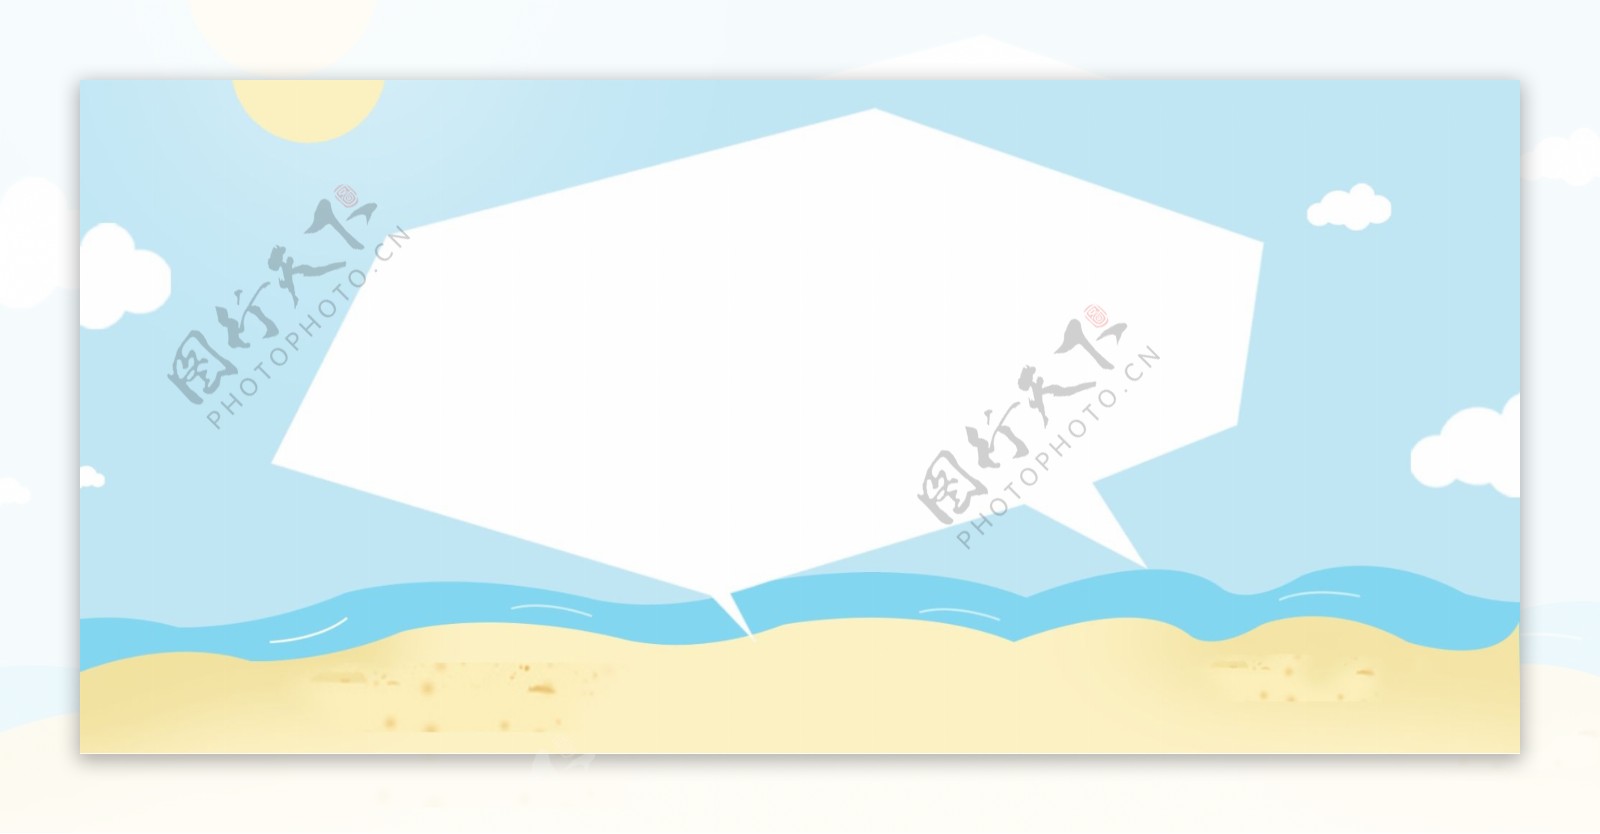 蓝白色沙滩banner背景设计